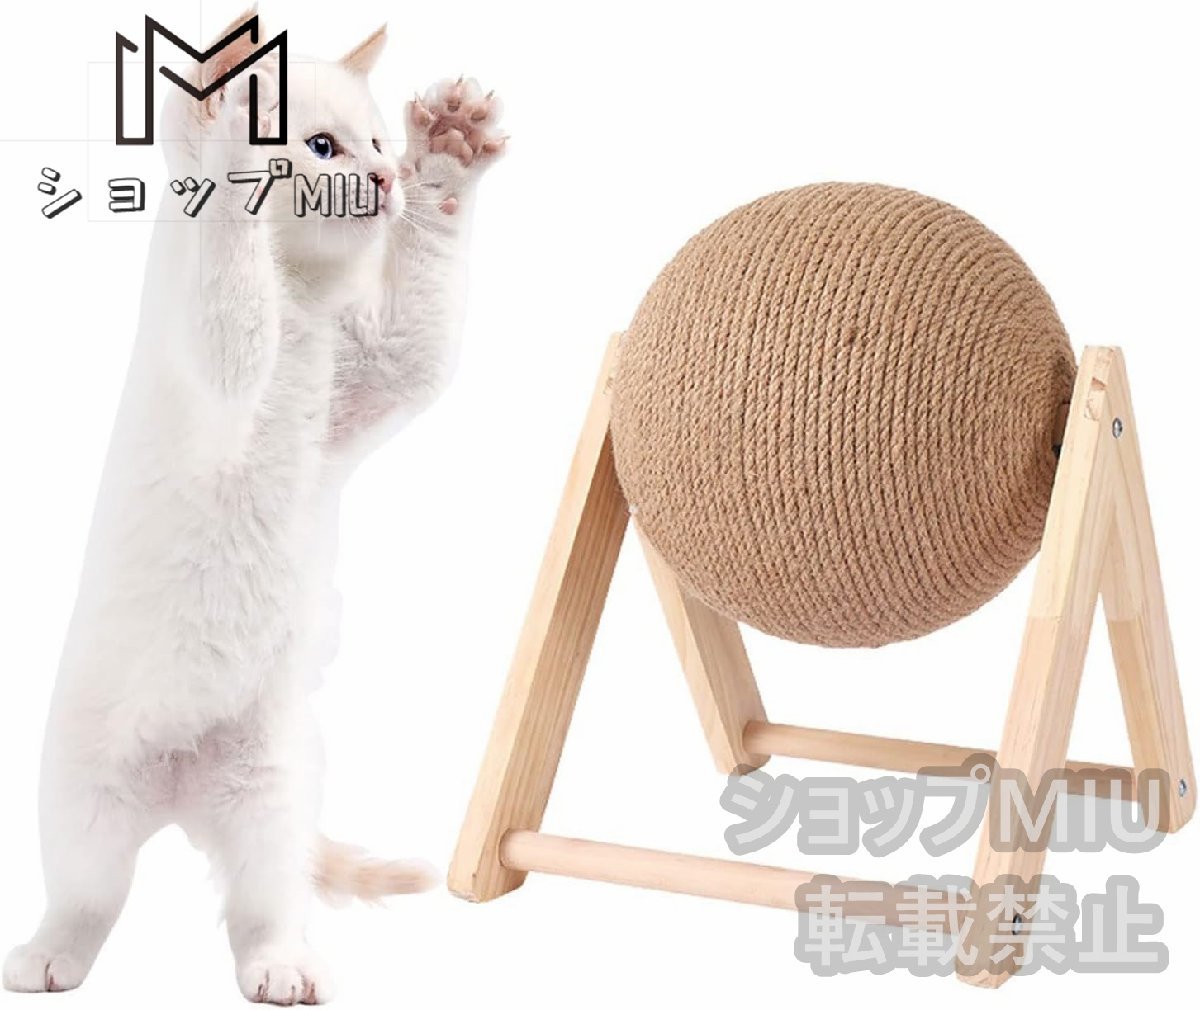  cat scratch. ball. toy . cat. rhinoceros The ru rope ball board crushing pair toy cat scratch. durability. exist pet furniture supplies 